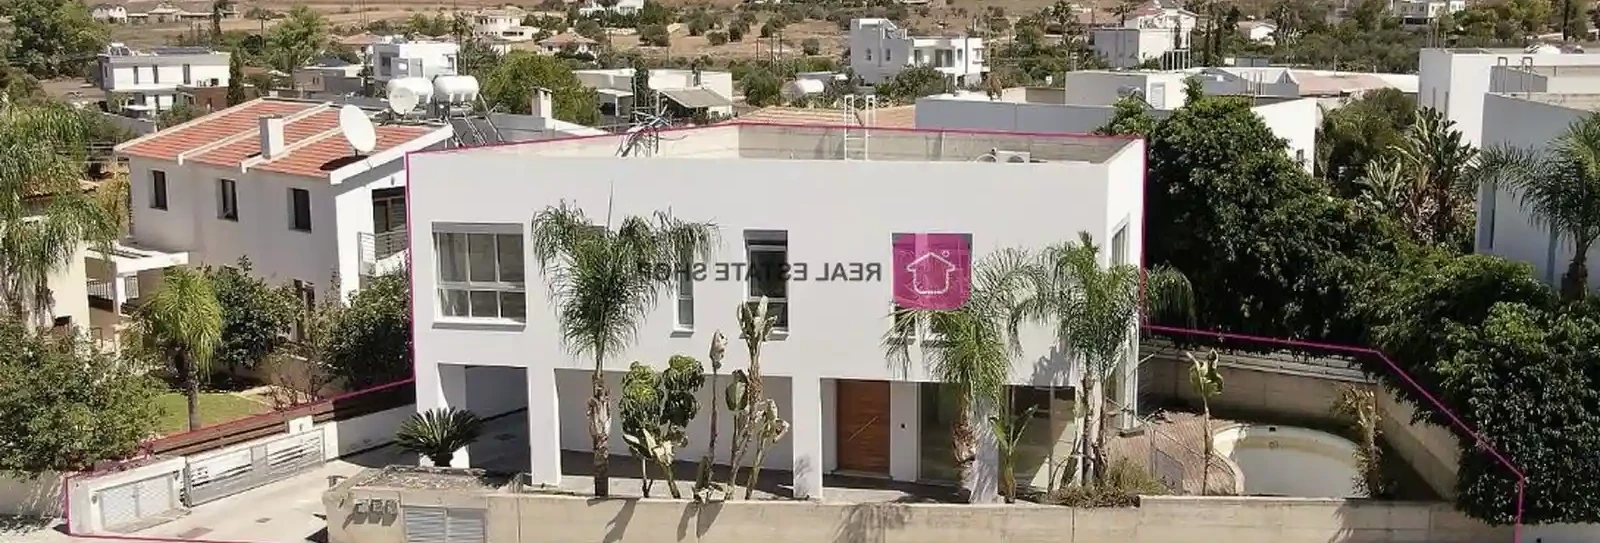 3-bedroom villa fоr sаle €375.000, image 1